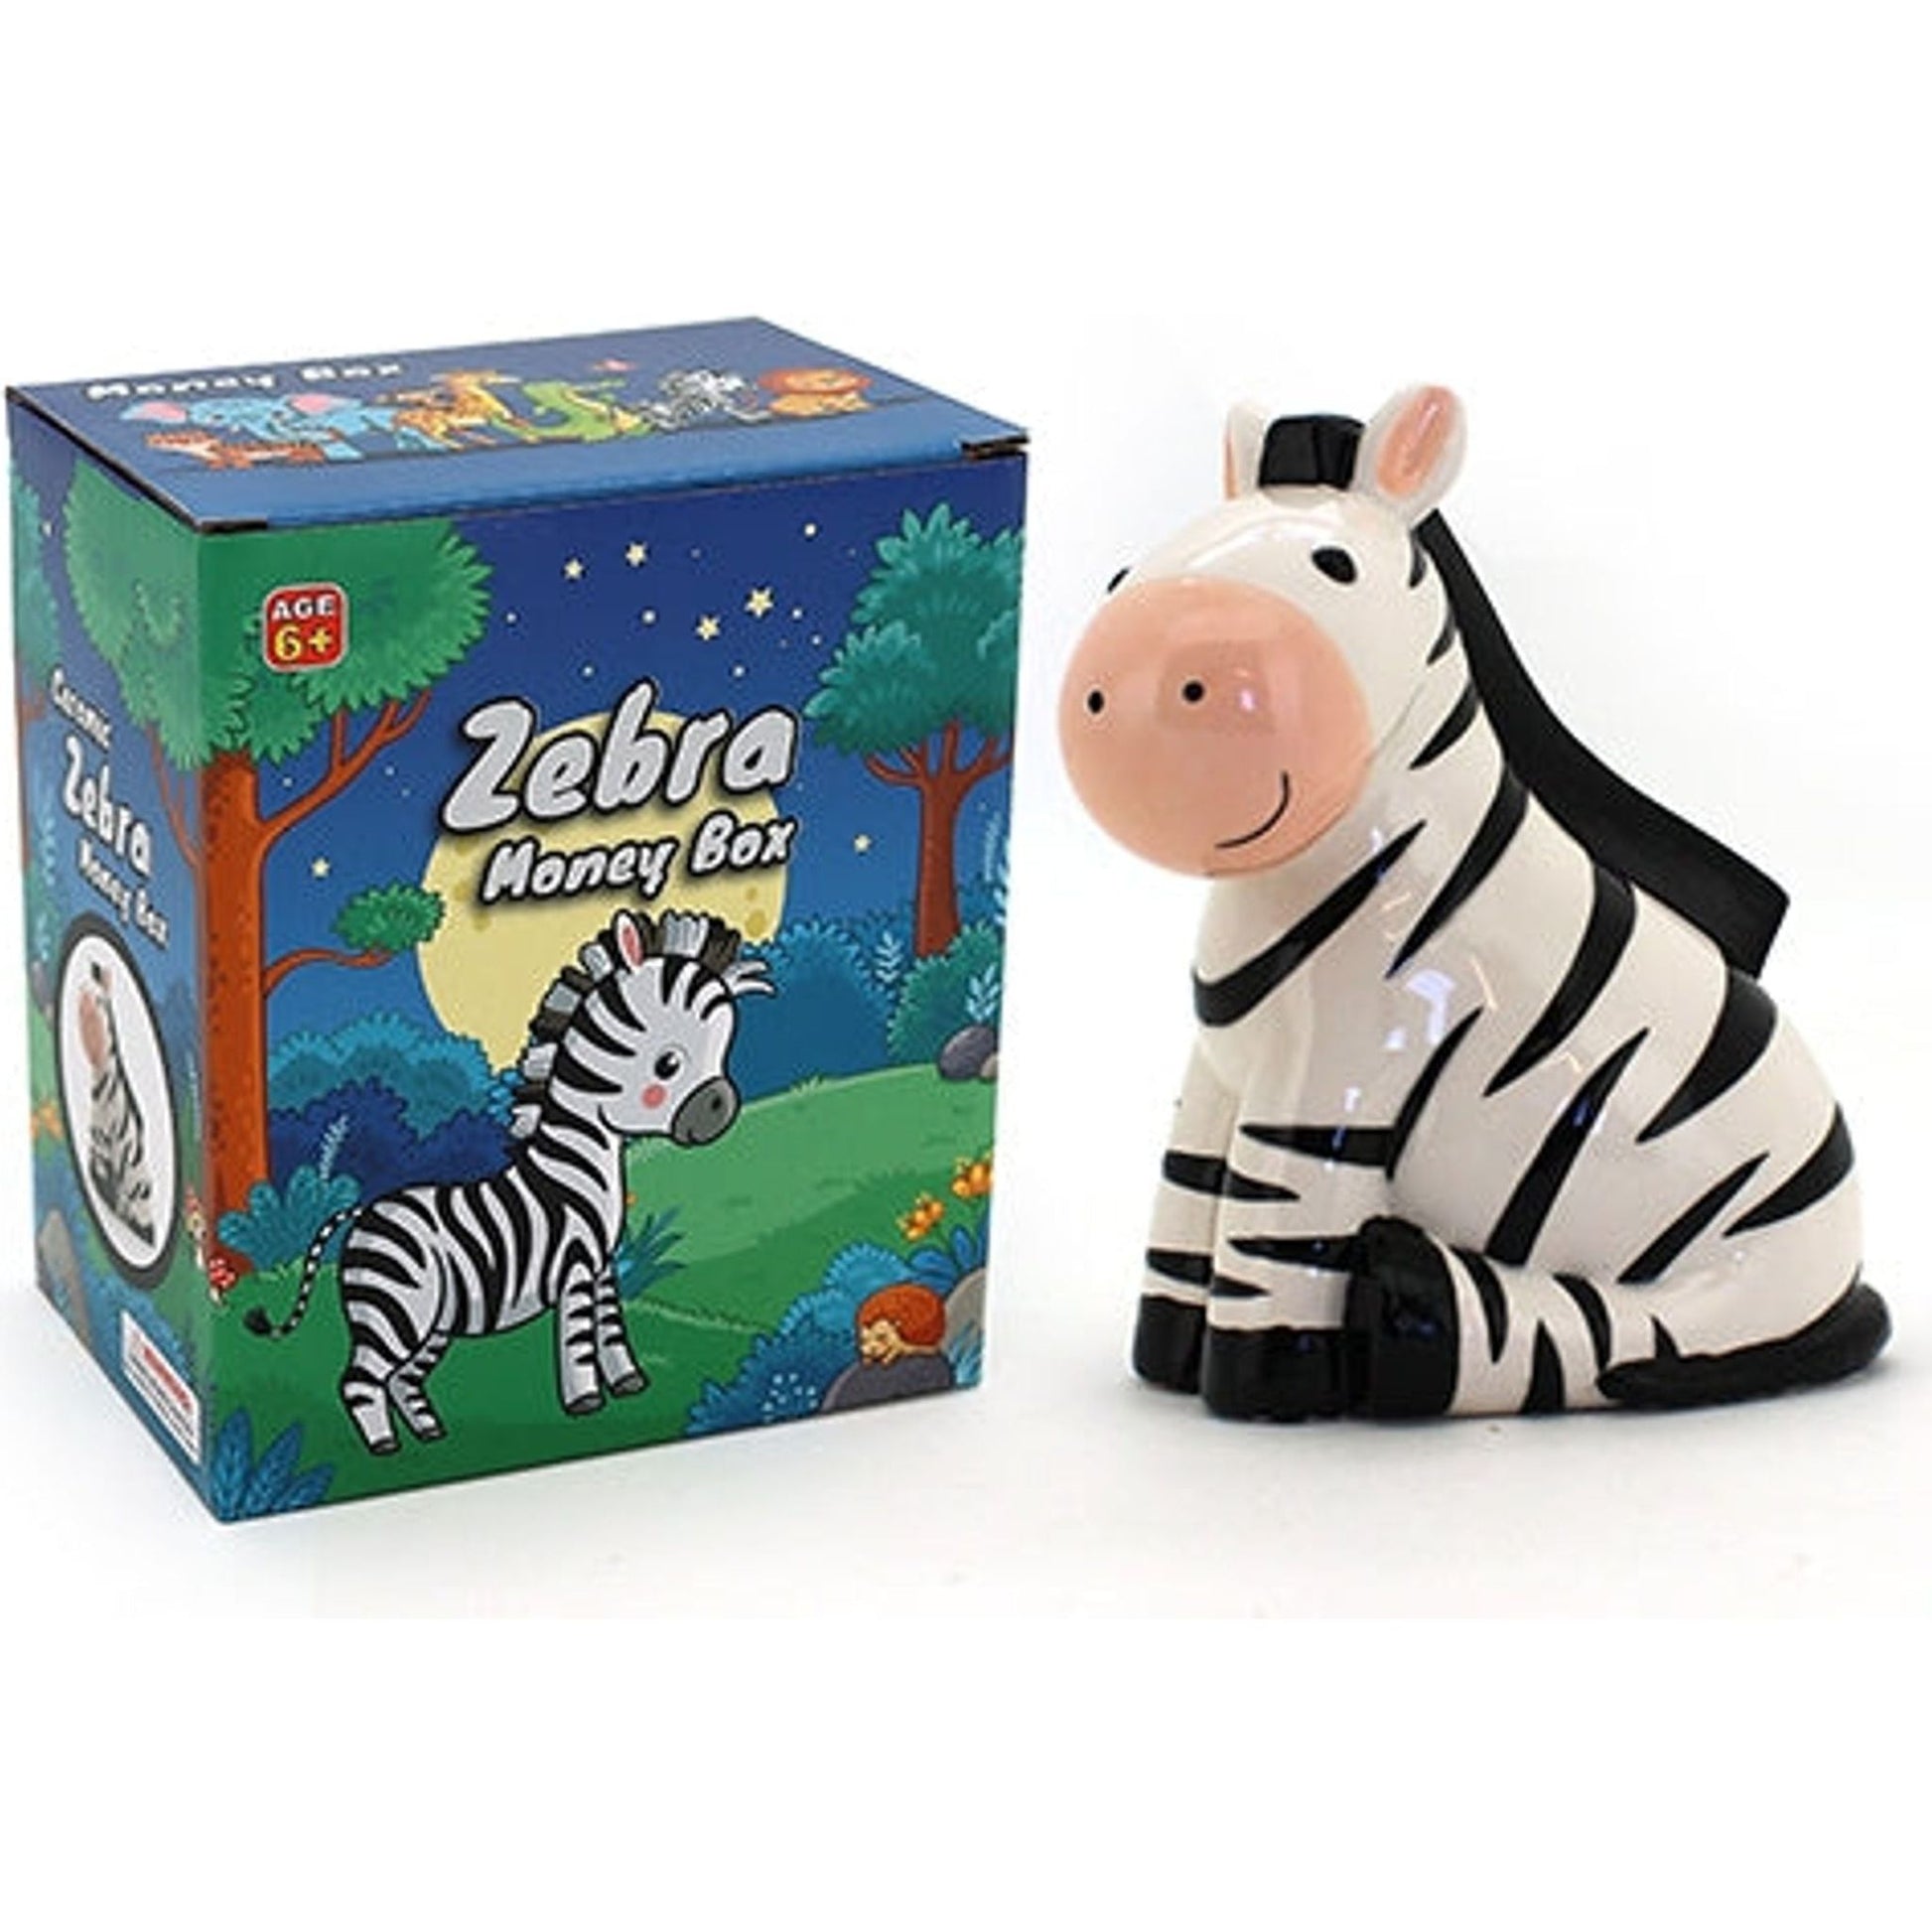 Ceramic Money Box - Zebra - Toybox Tales